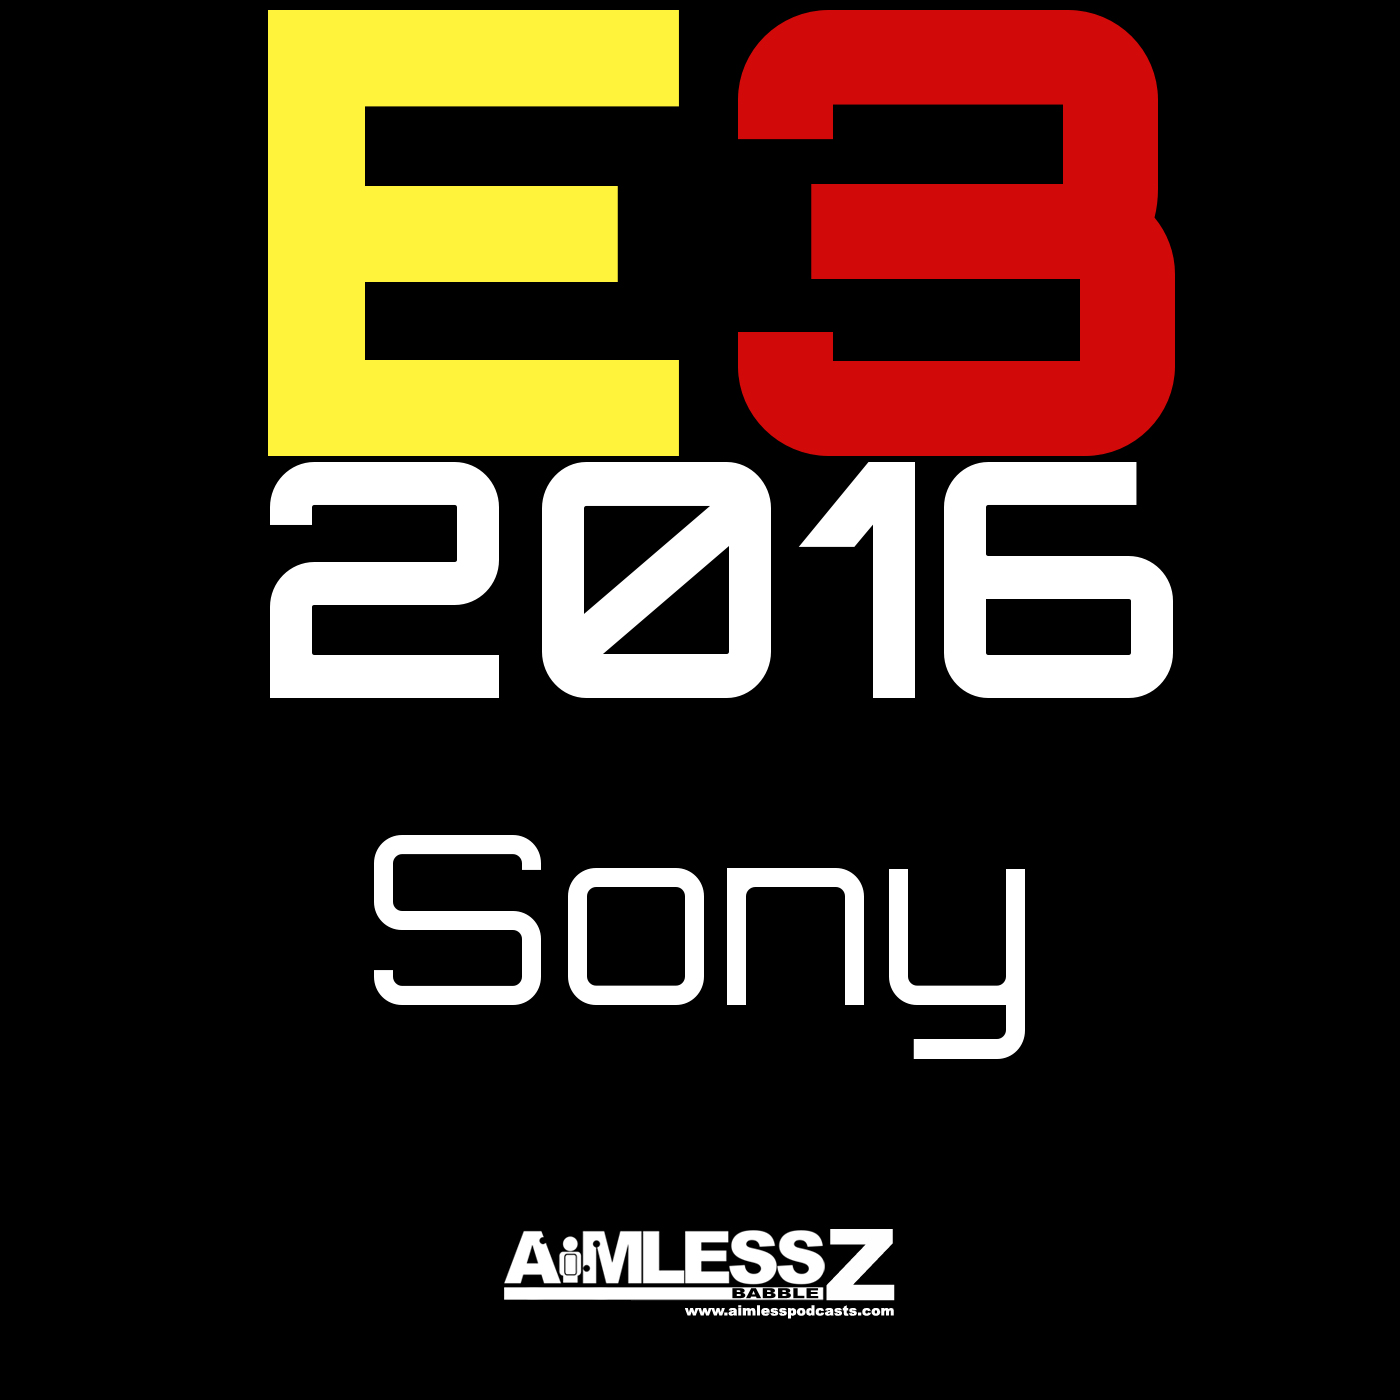 E3 2016: Sony Press Briefing Impressions